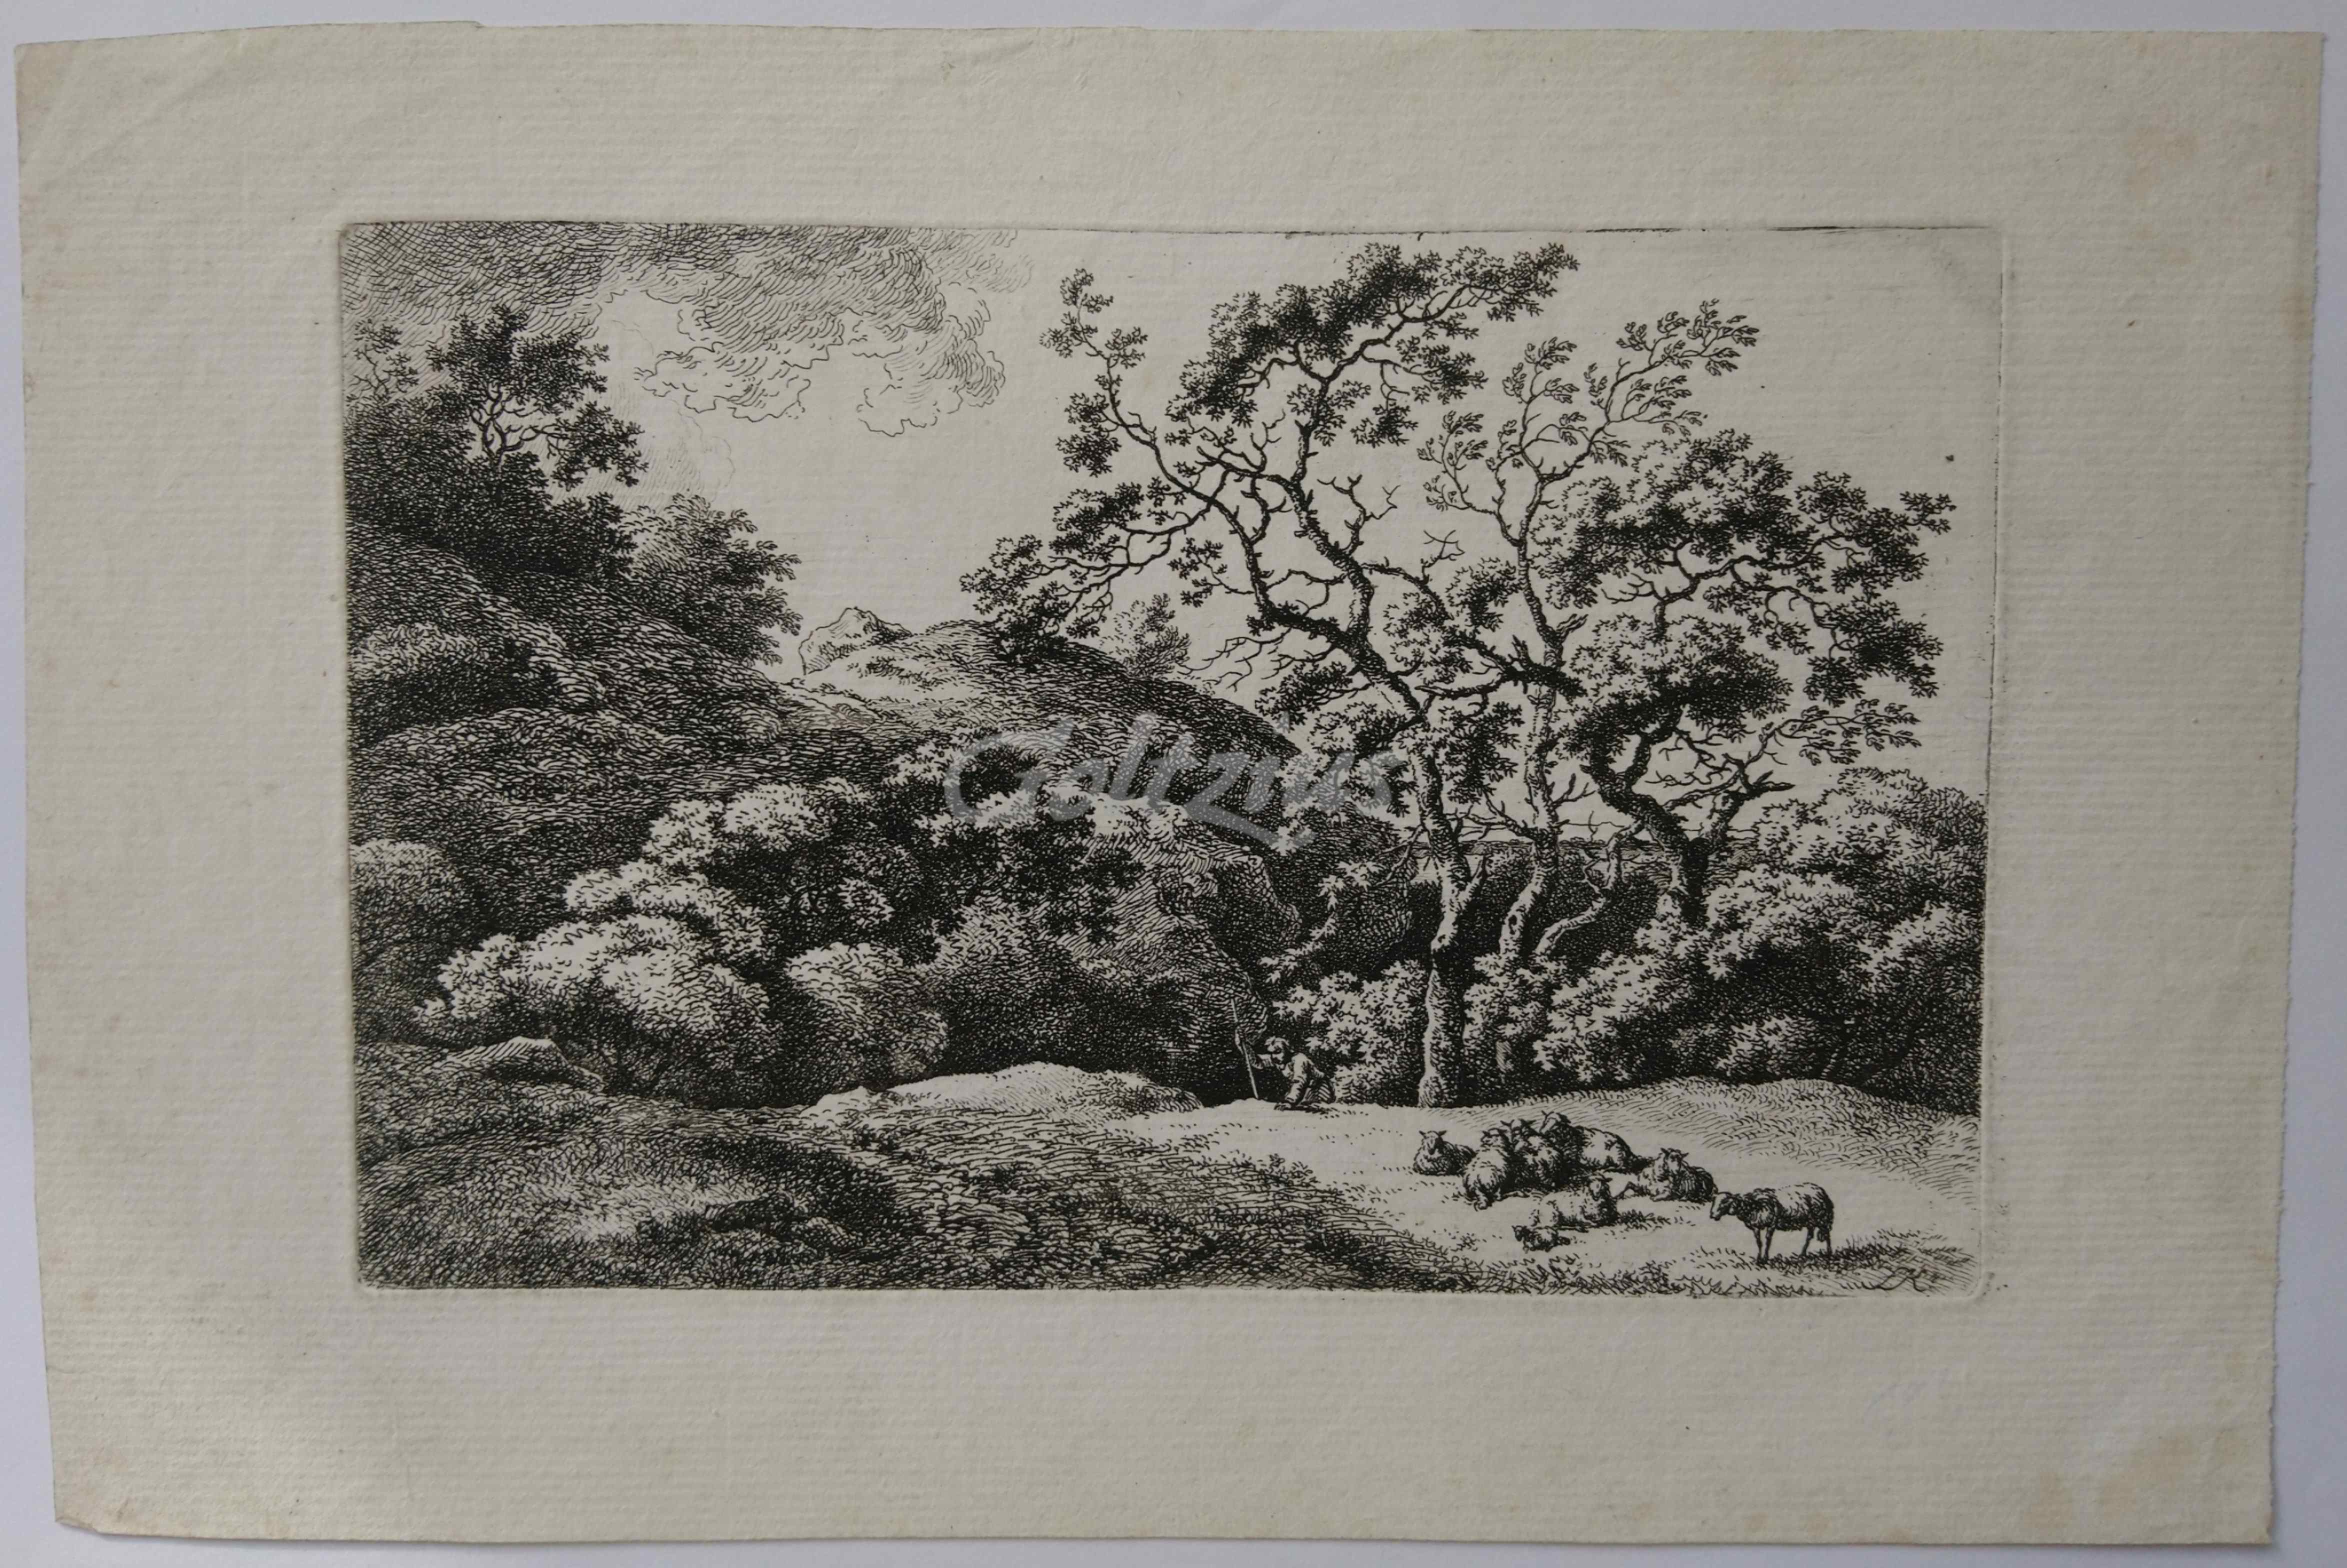 KOBELL, FERDINAND, Shepherd with sheep in a dune landscape